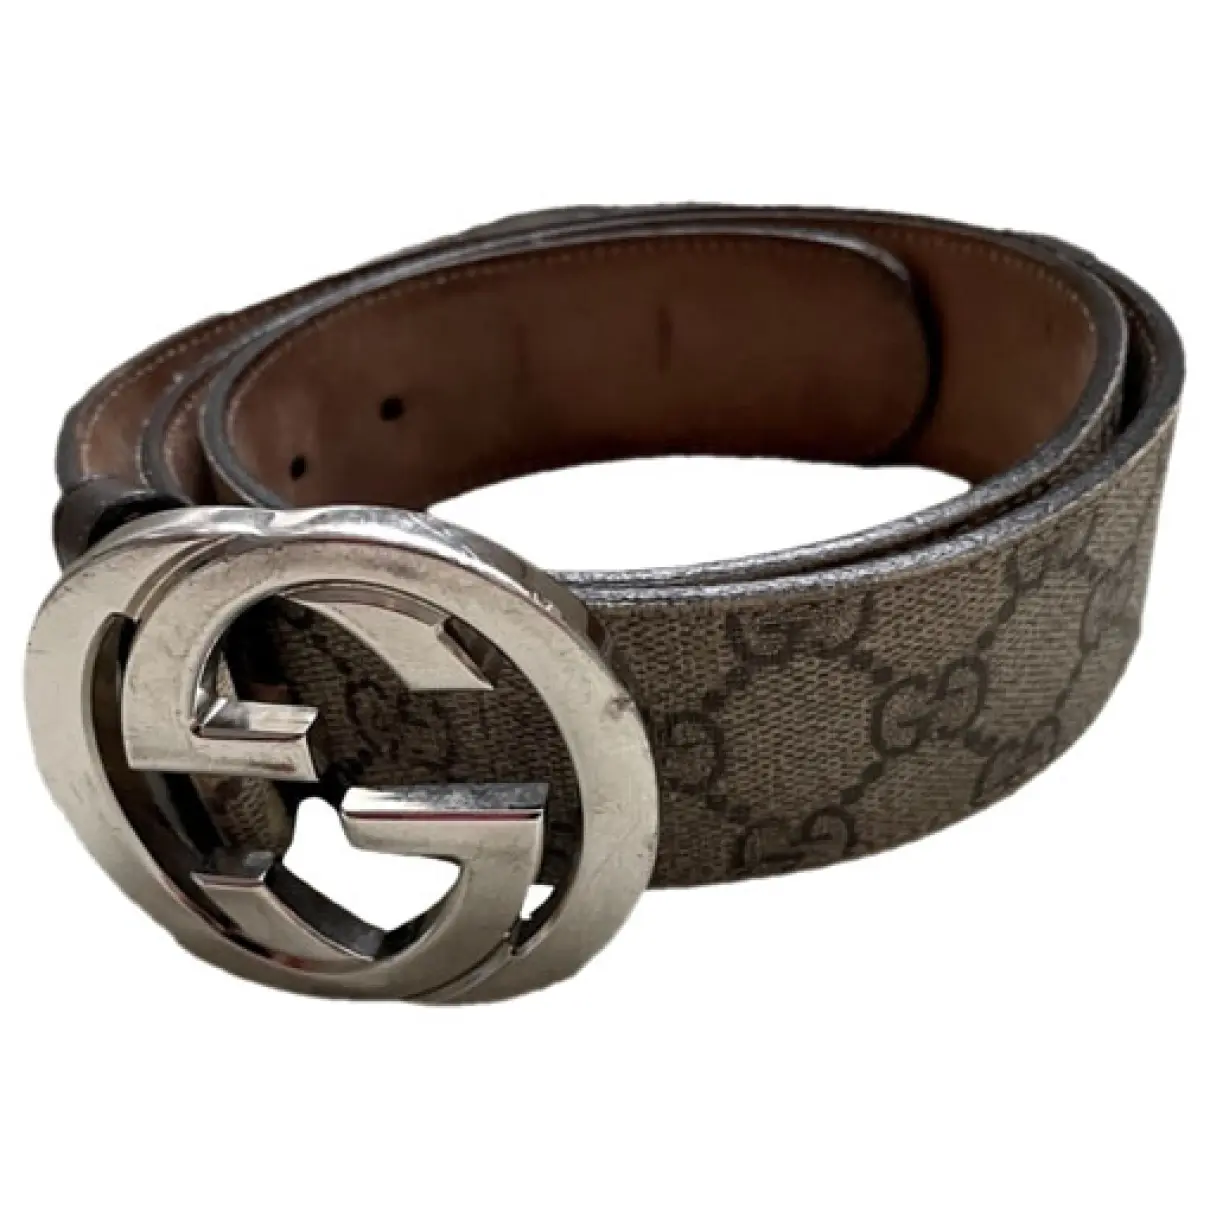 Interlocking Buckle leather belt